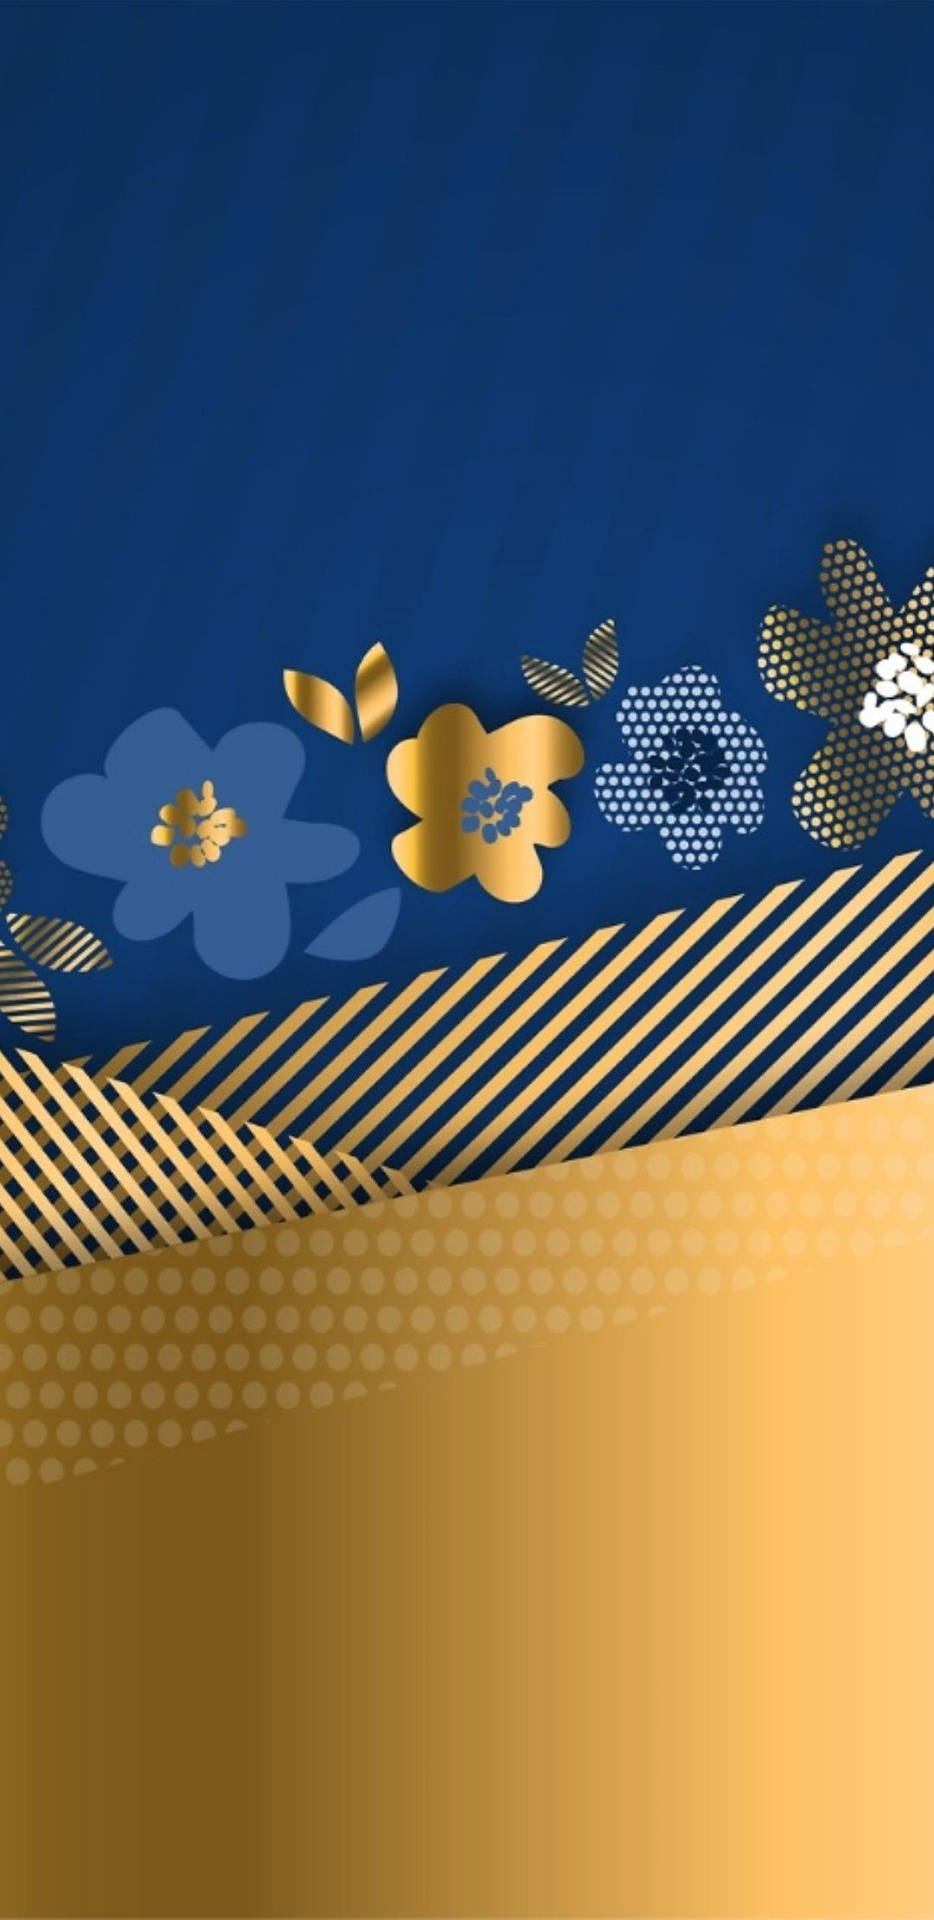 Blaueund Goldene Blumen Wallpaper